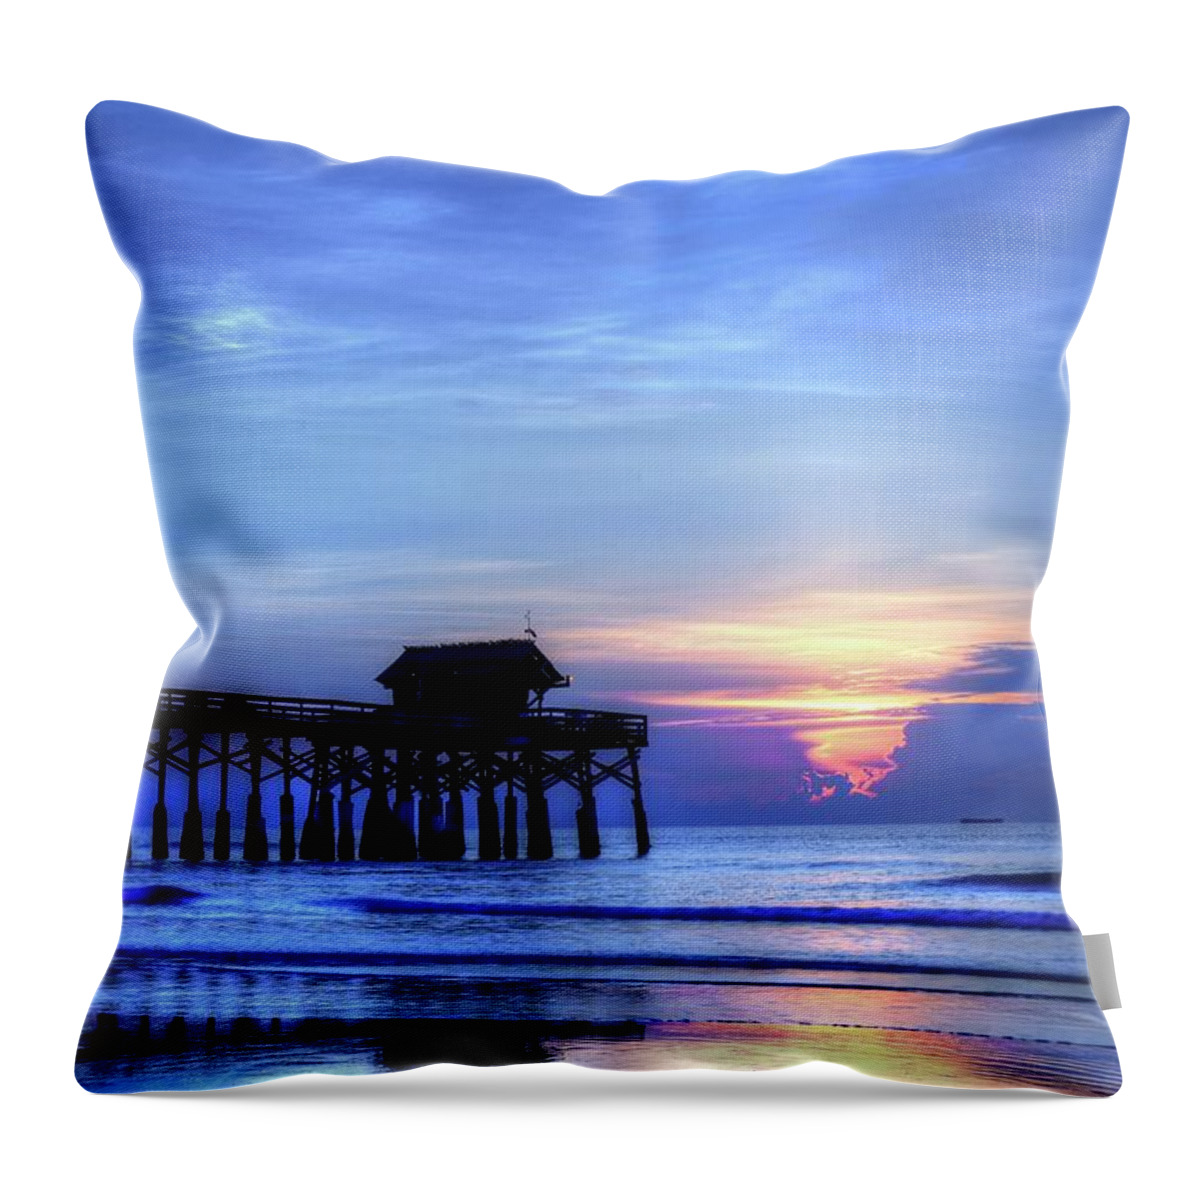 Blue Morning Over Cocoa Beach Pier Throw Pillow featuring the photograph Blue Morning Over Cocoa Beach Pier by Carol Montoya